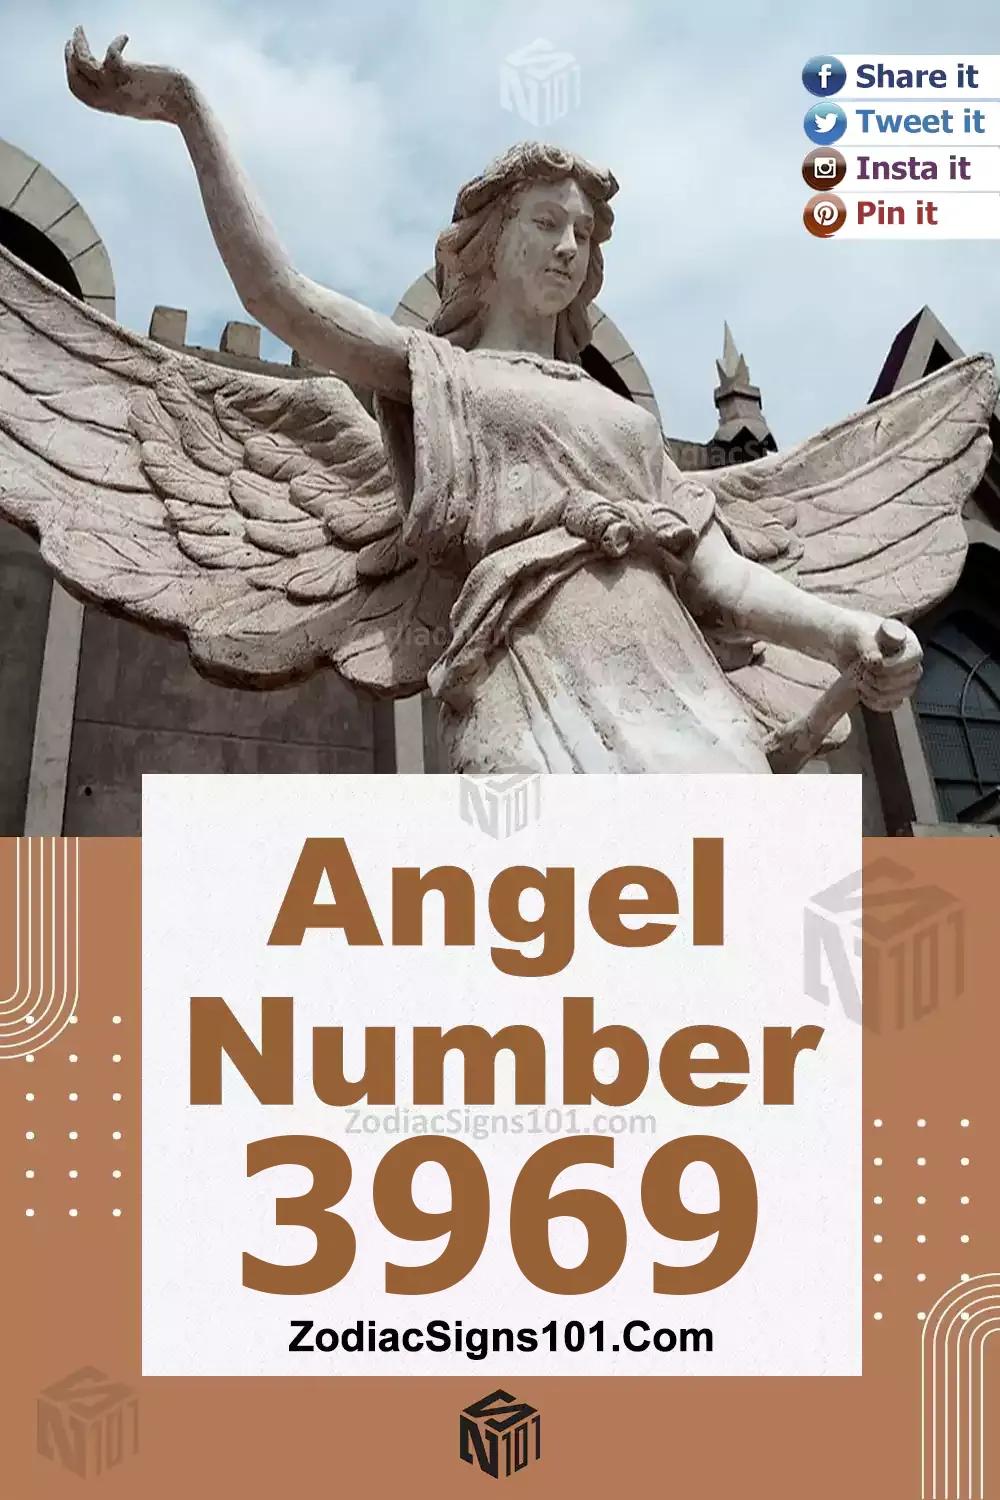 3969-Angel-Number-Meaning.jpg